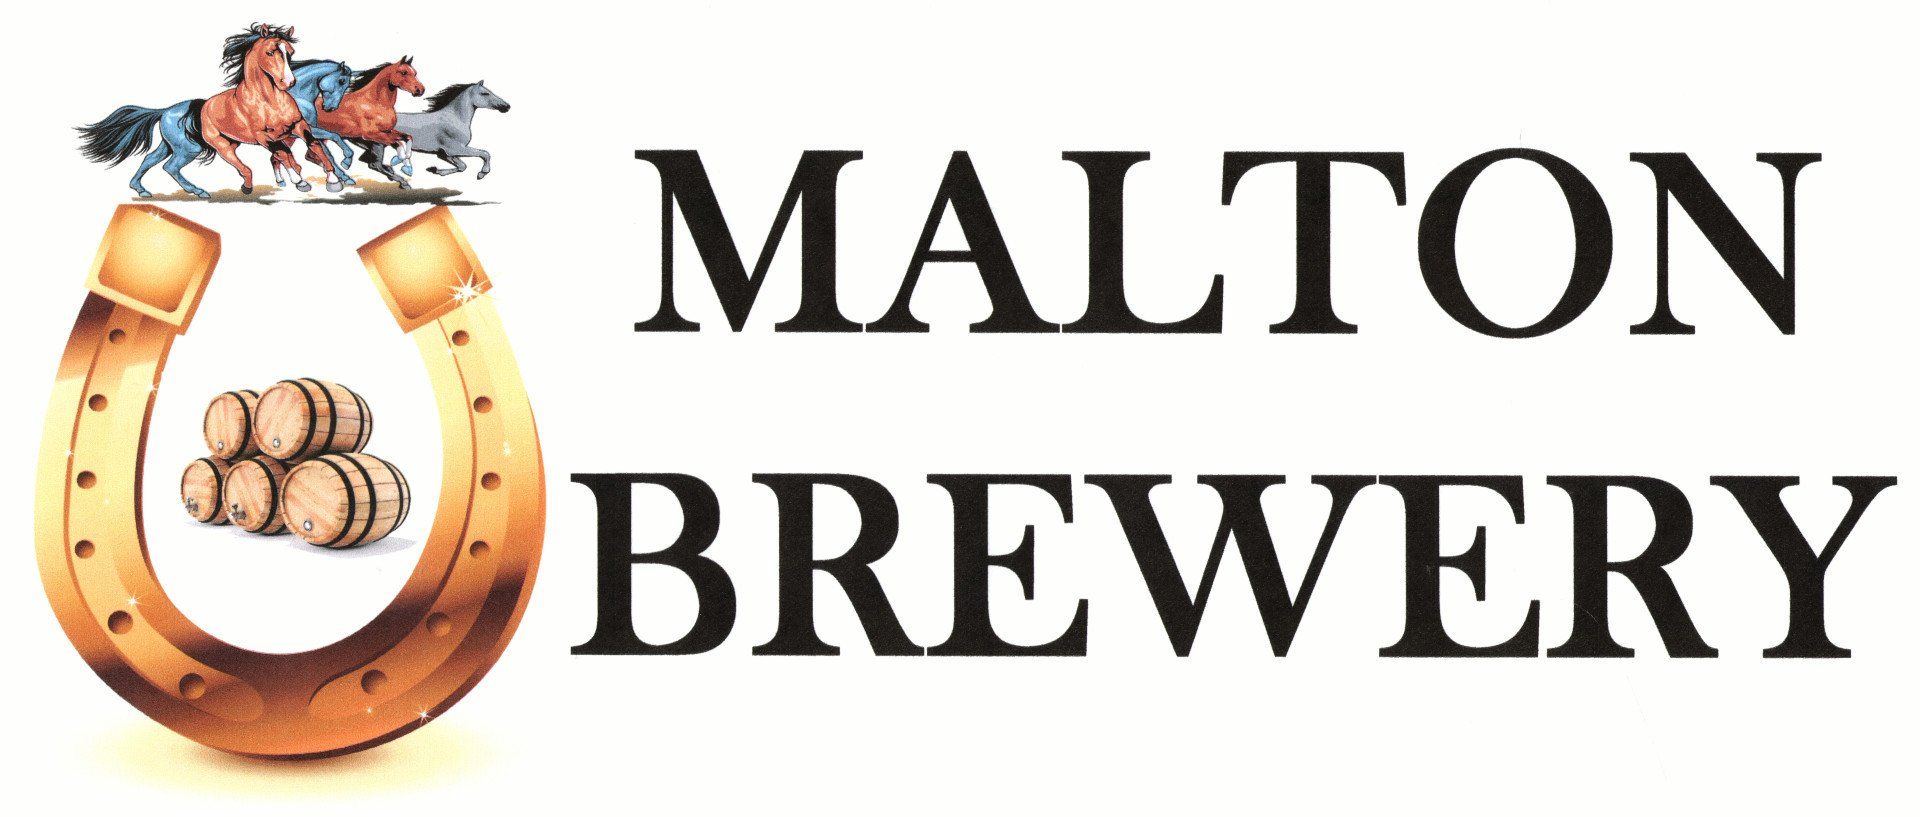 MALTON BREWERY